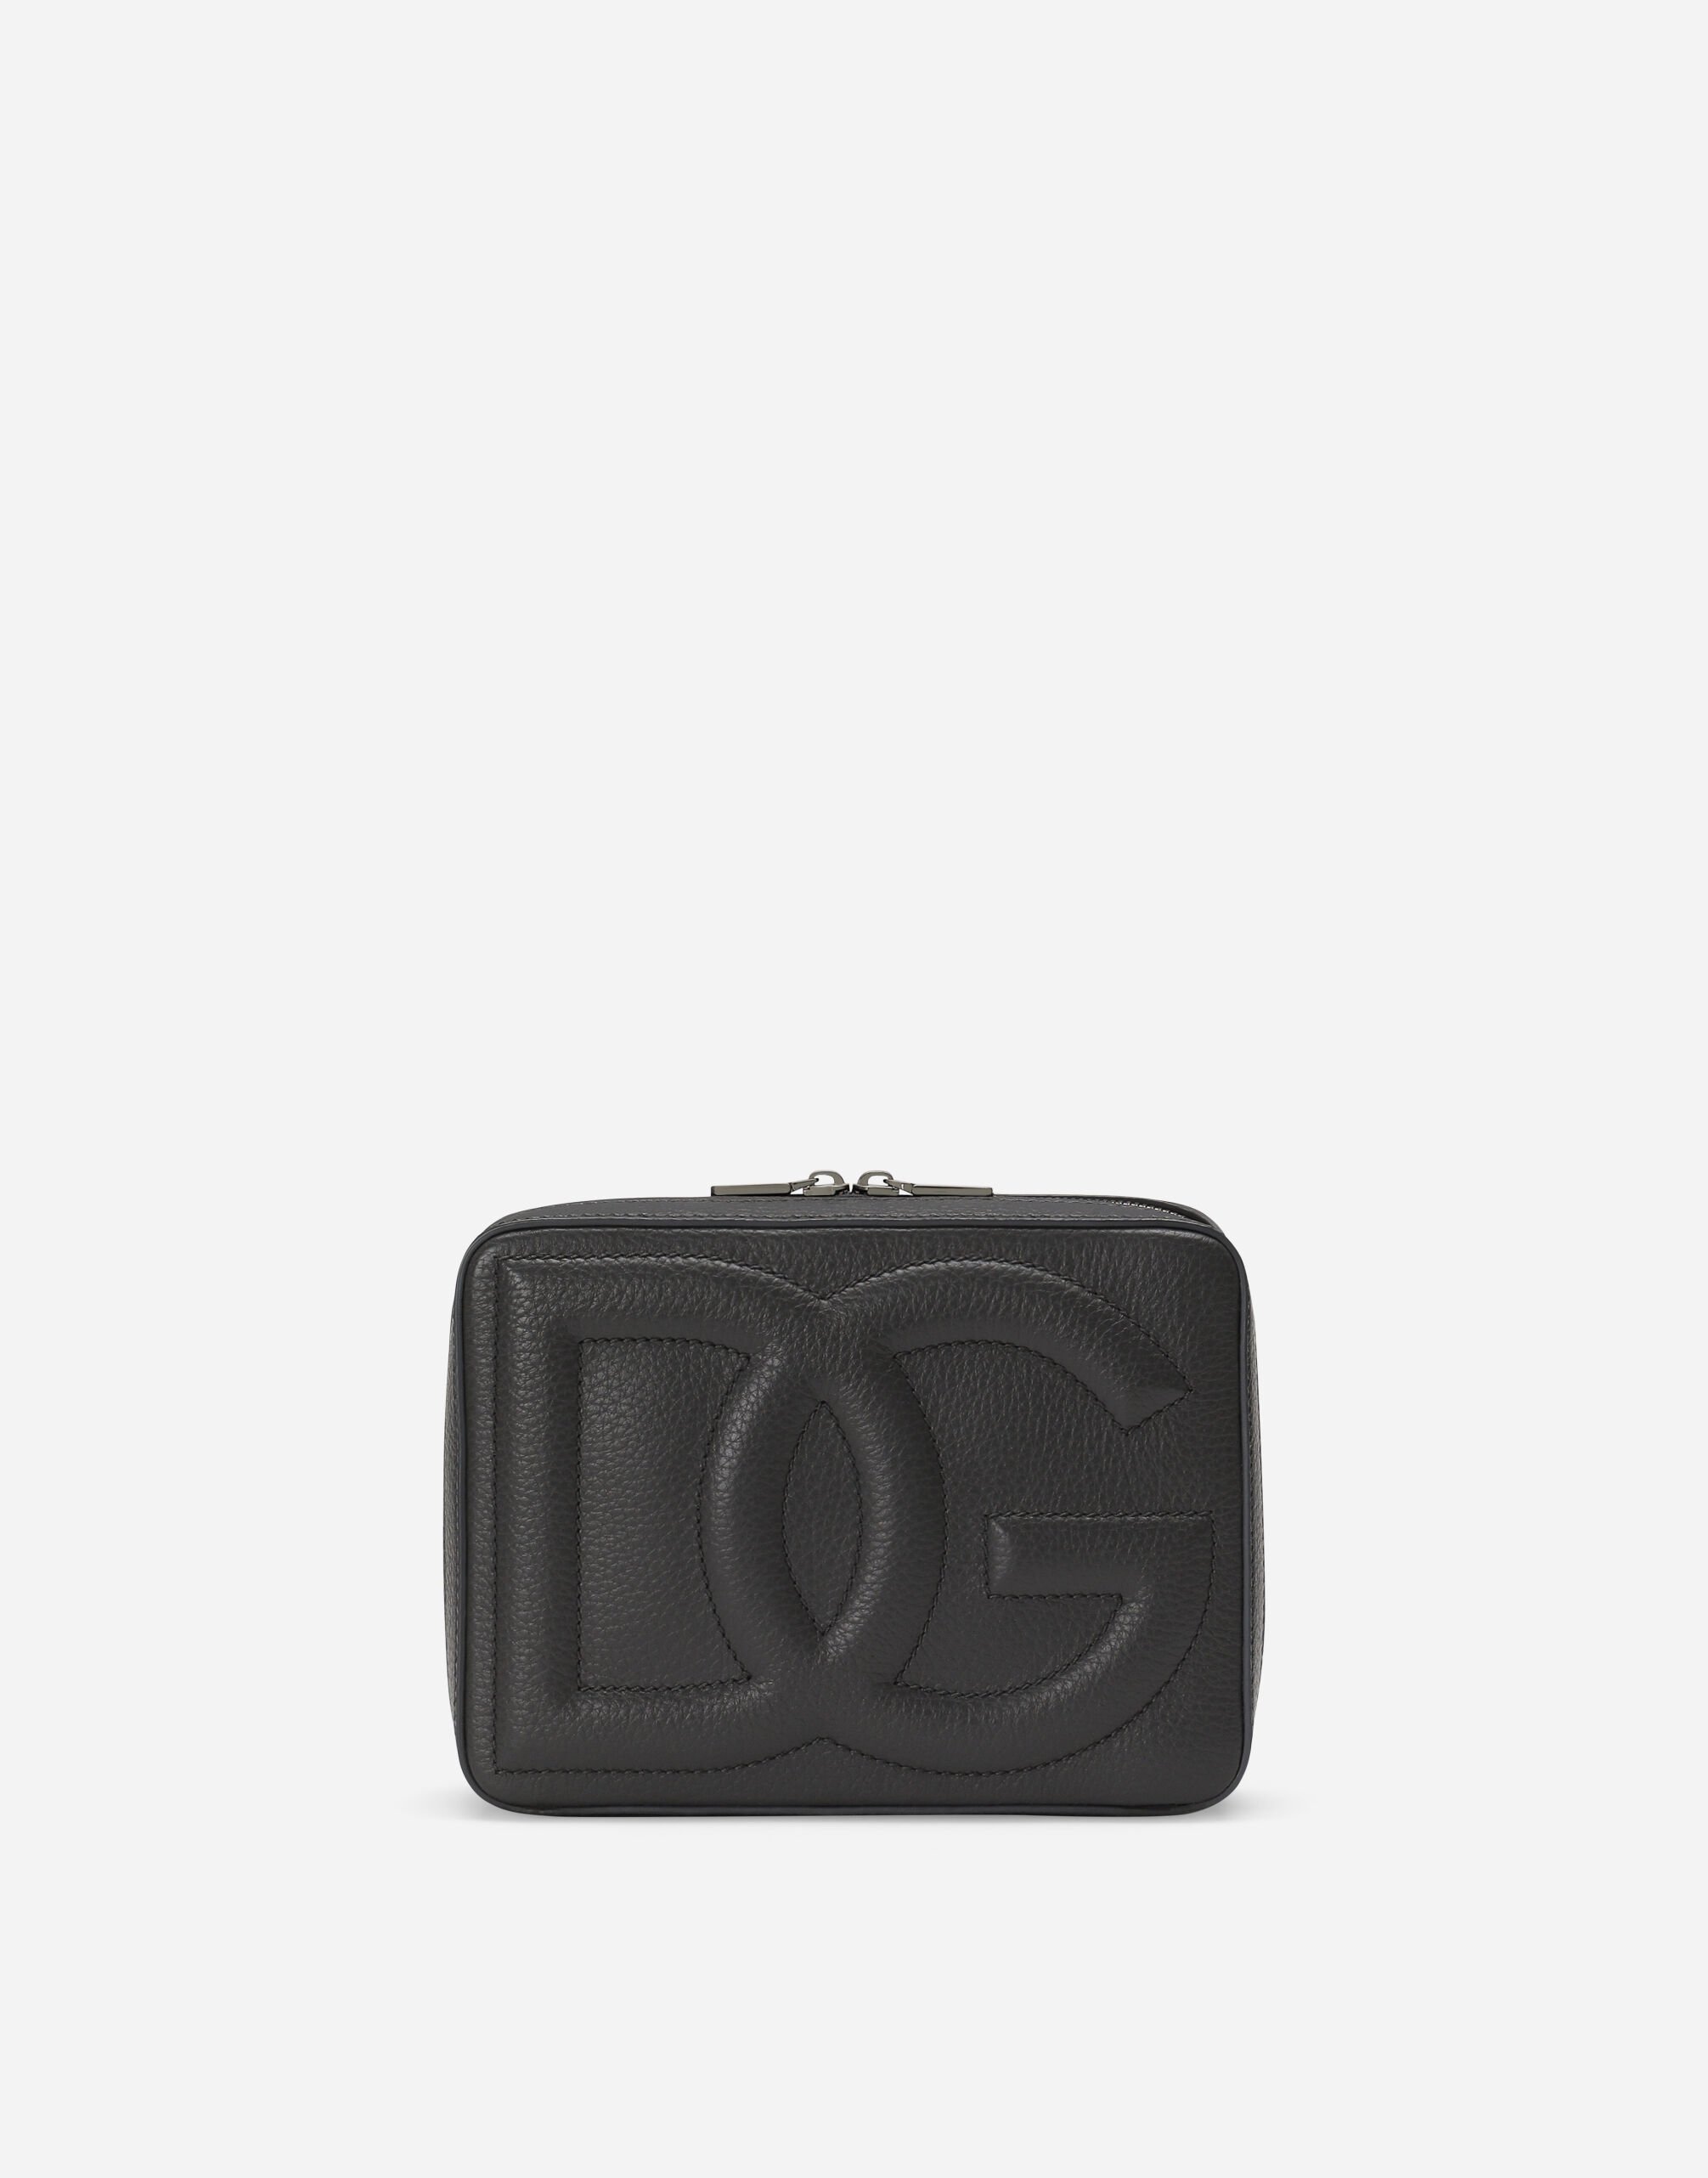 Dolce & Gabbana DGロゴバッグ カメラバッグ ミディアム ブラウン BM3004A1275